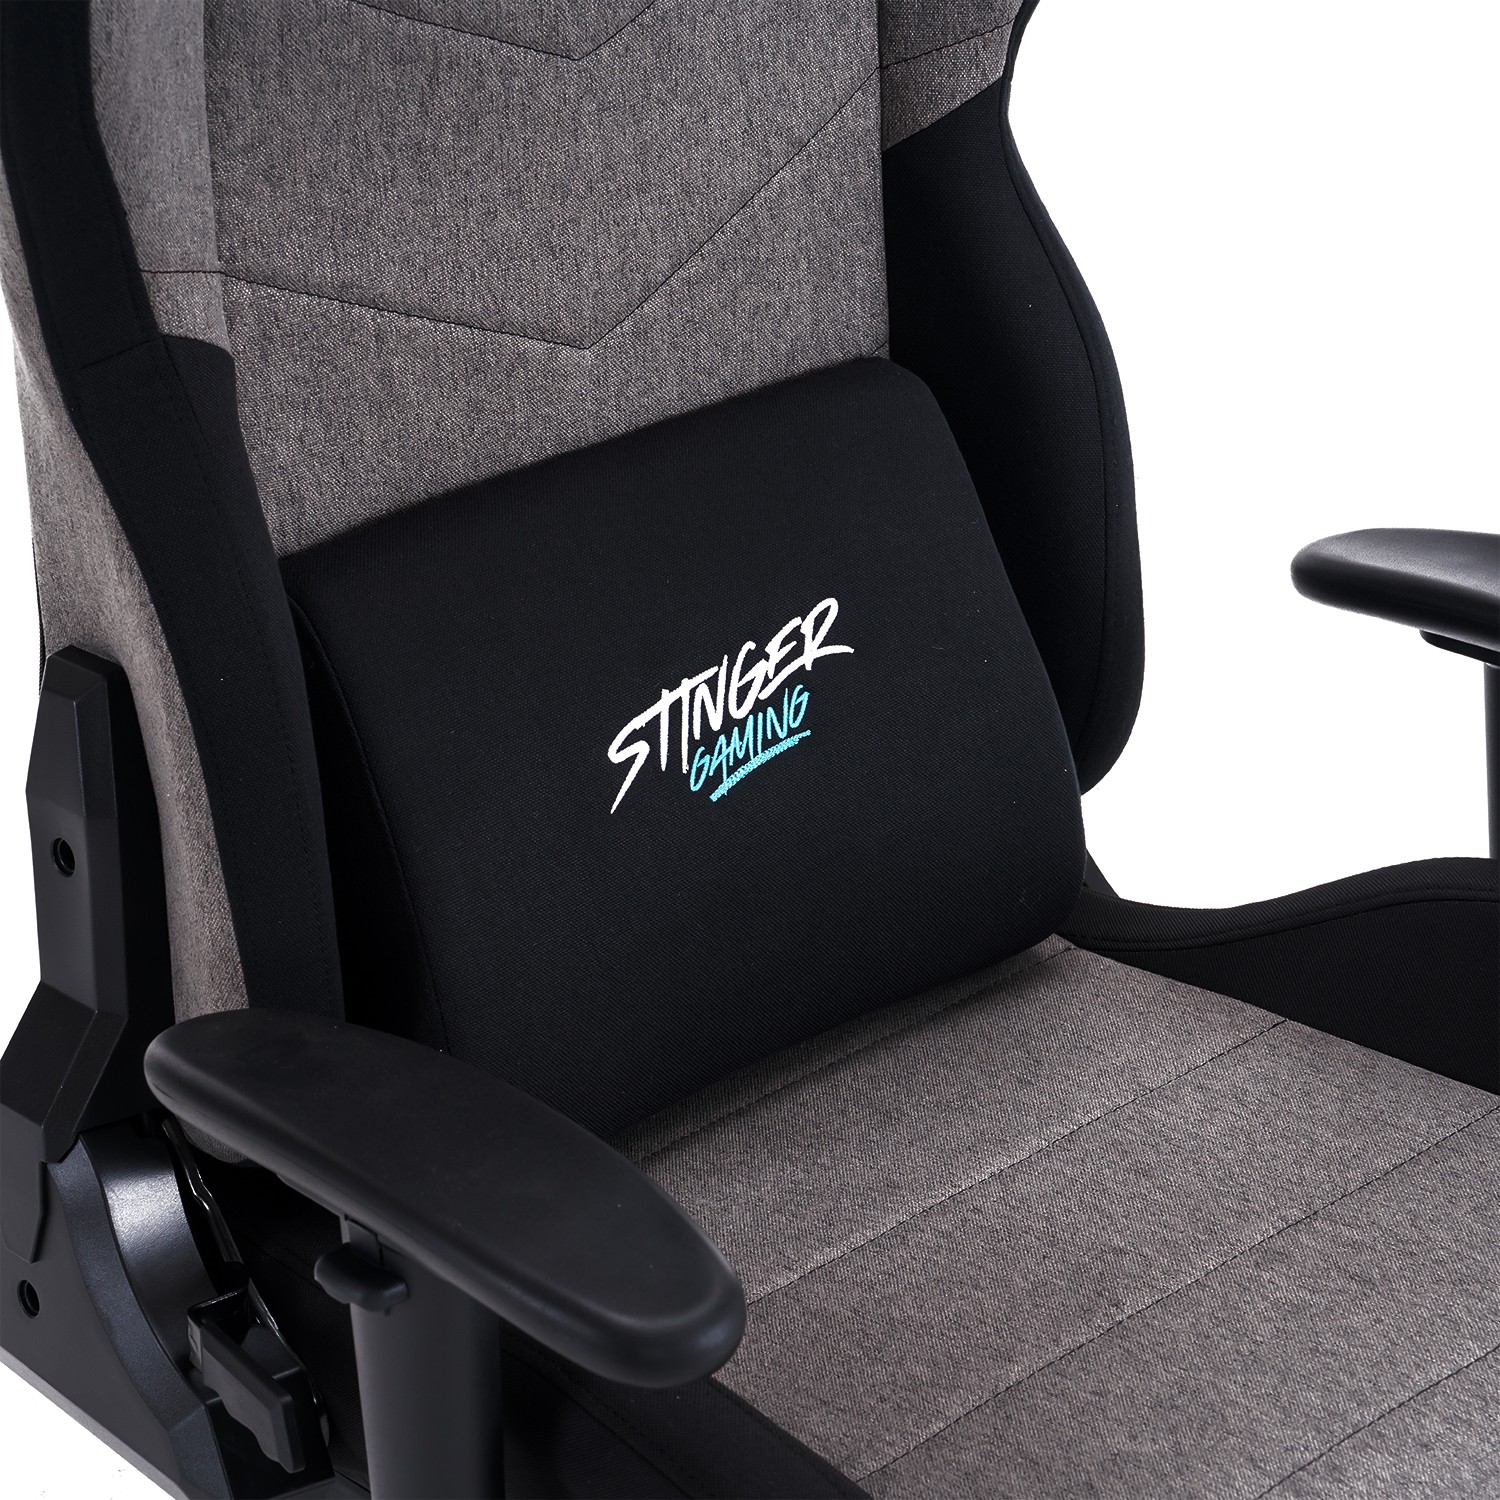 Stinger Gaming renueva sus sillas gaming con tela hidrófuga